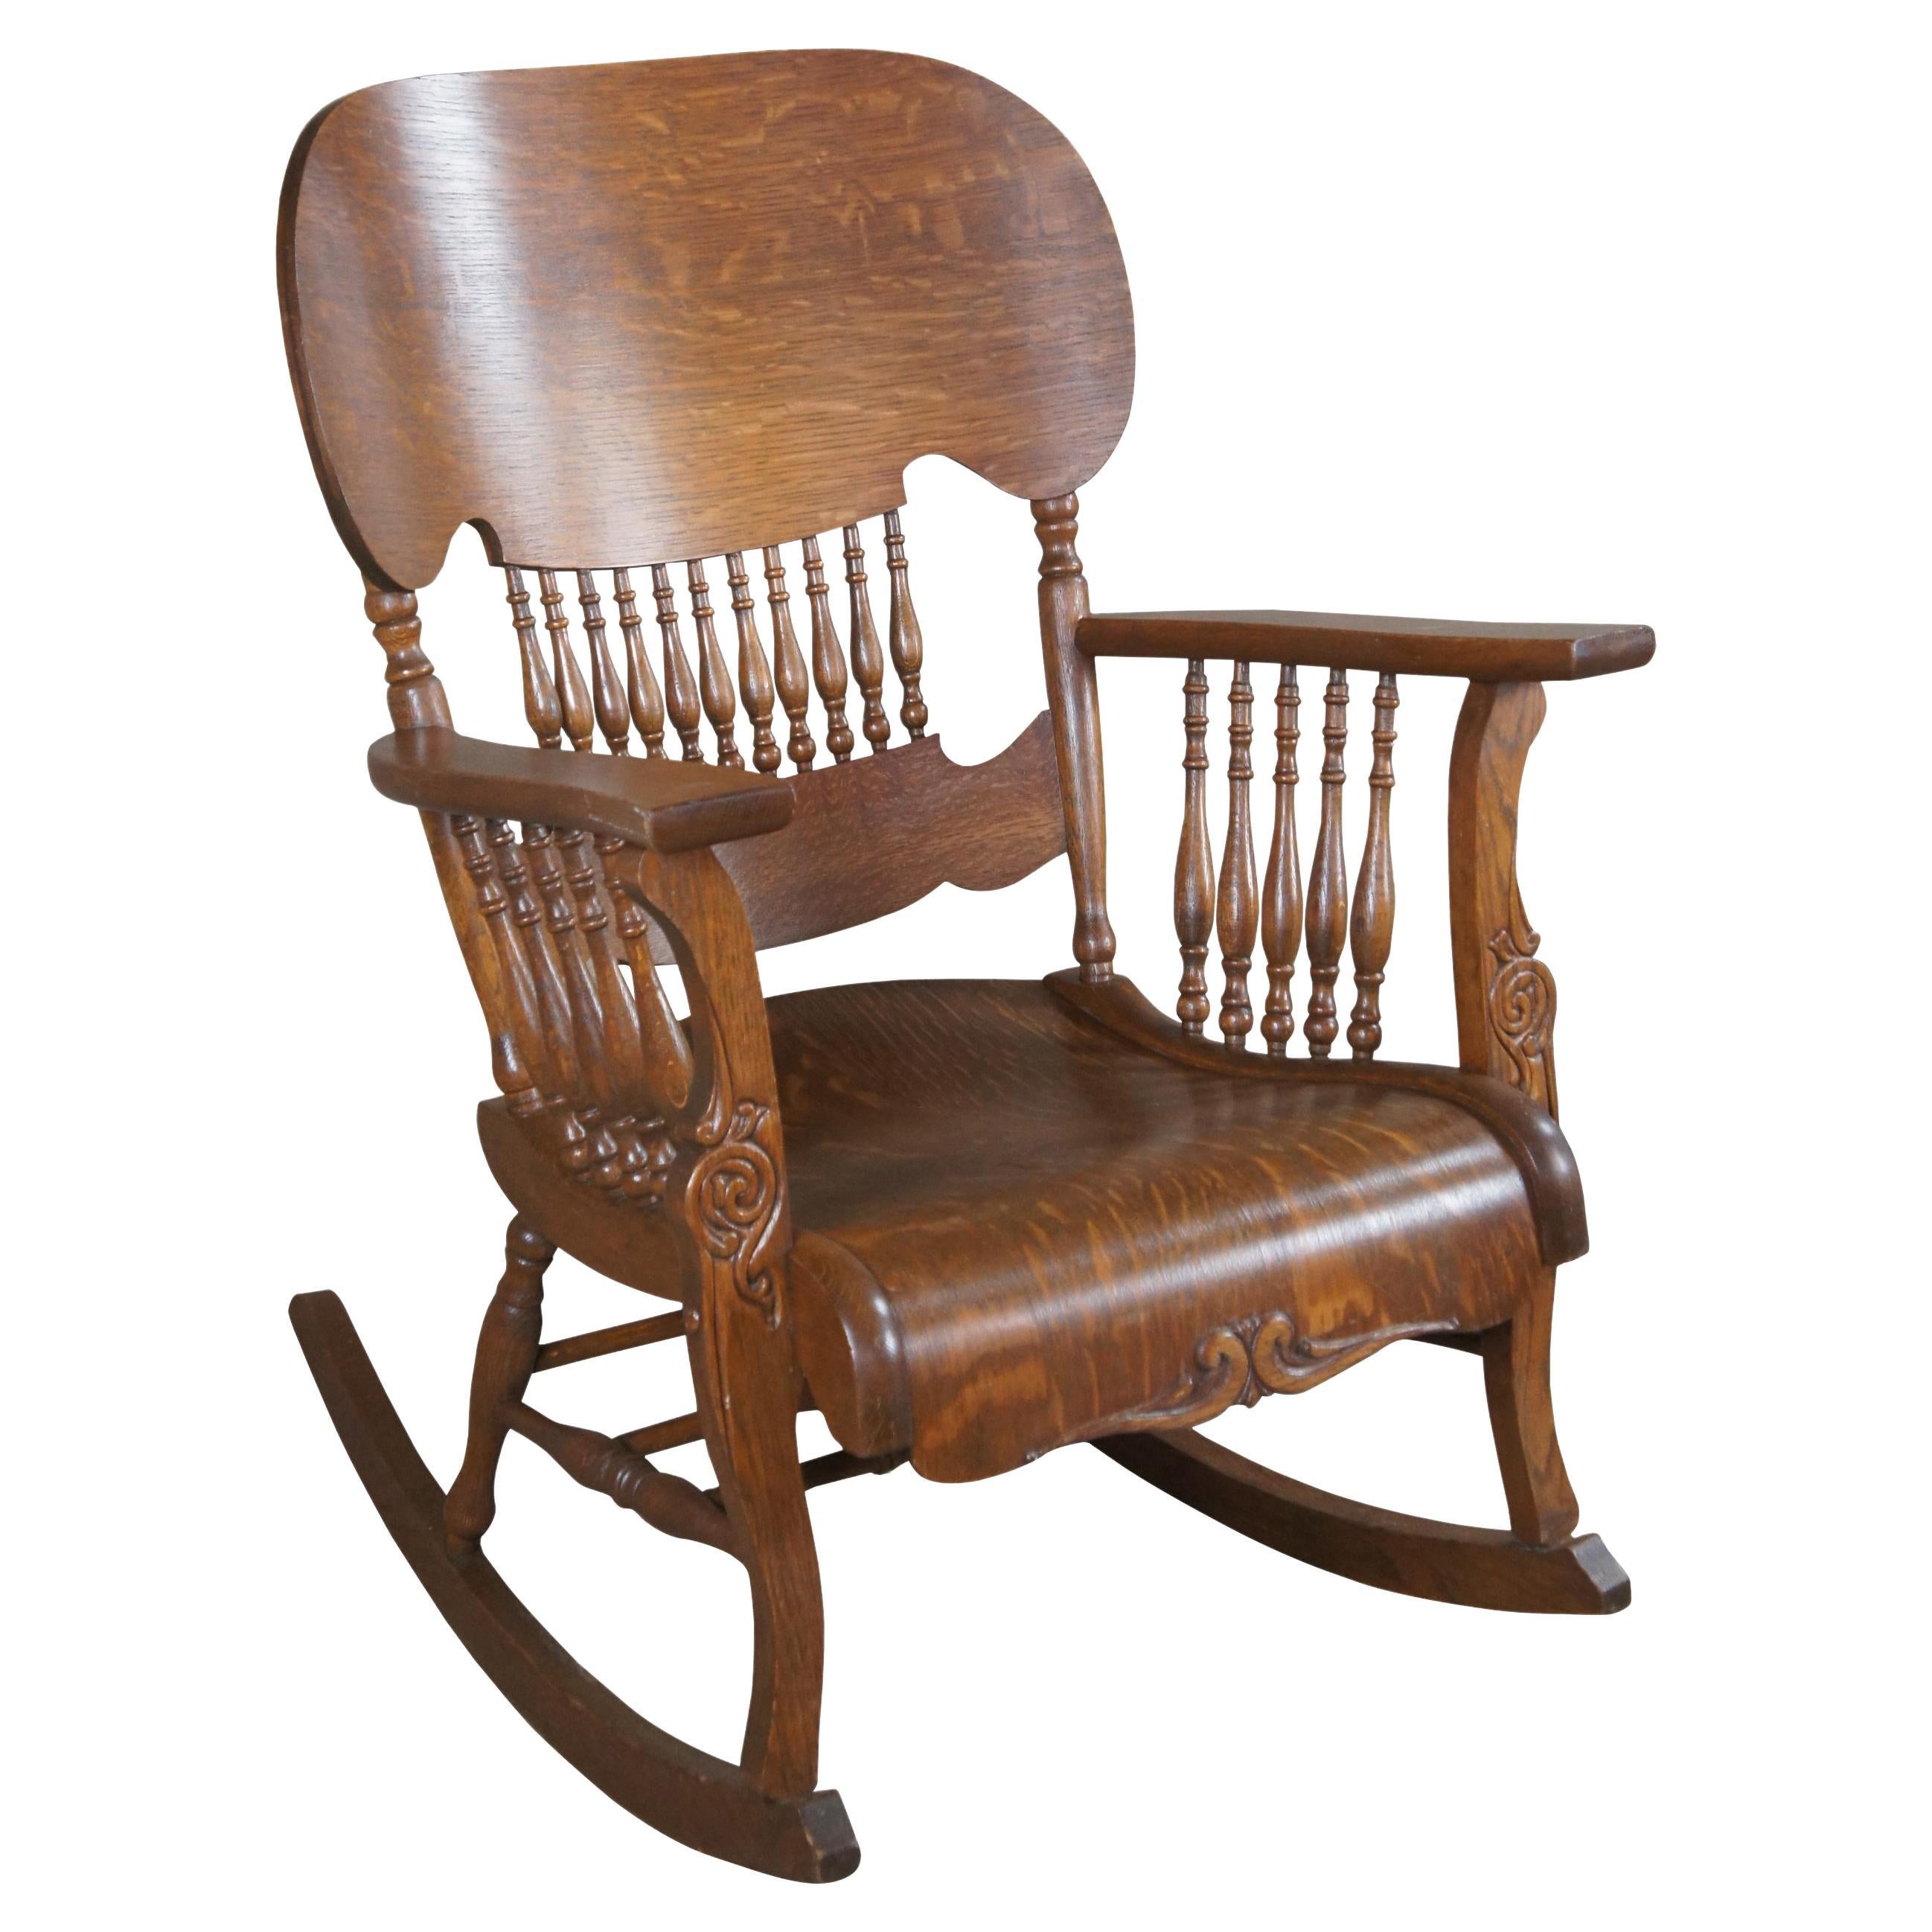 Antique Arts & Crafts Mission Quartersawn Oak Bentwood Rocking Arm Chair Rocker